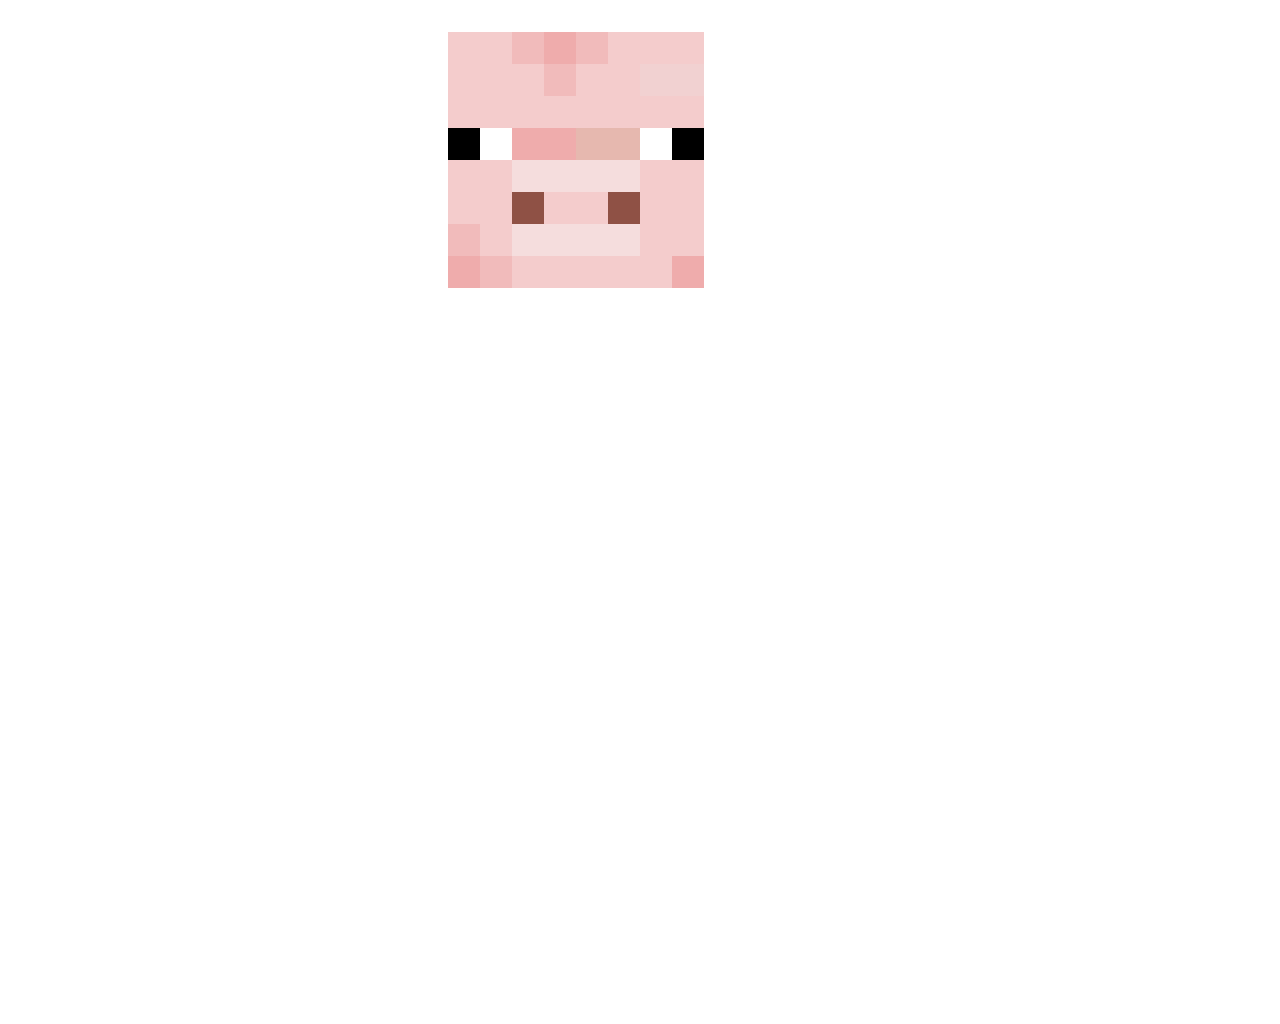 minecraft pig png